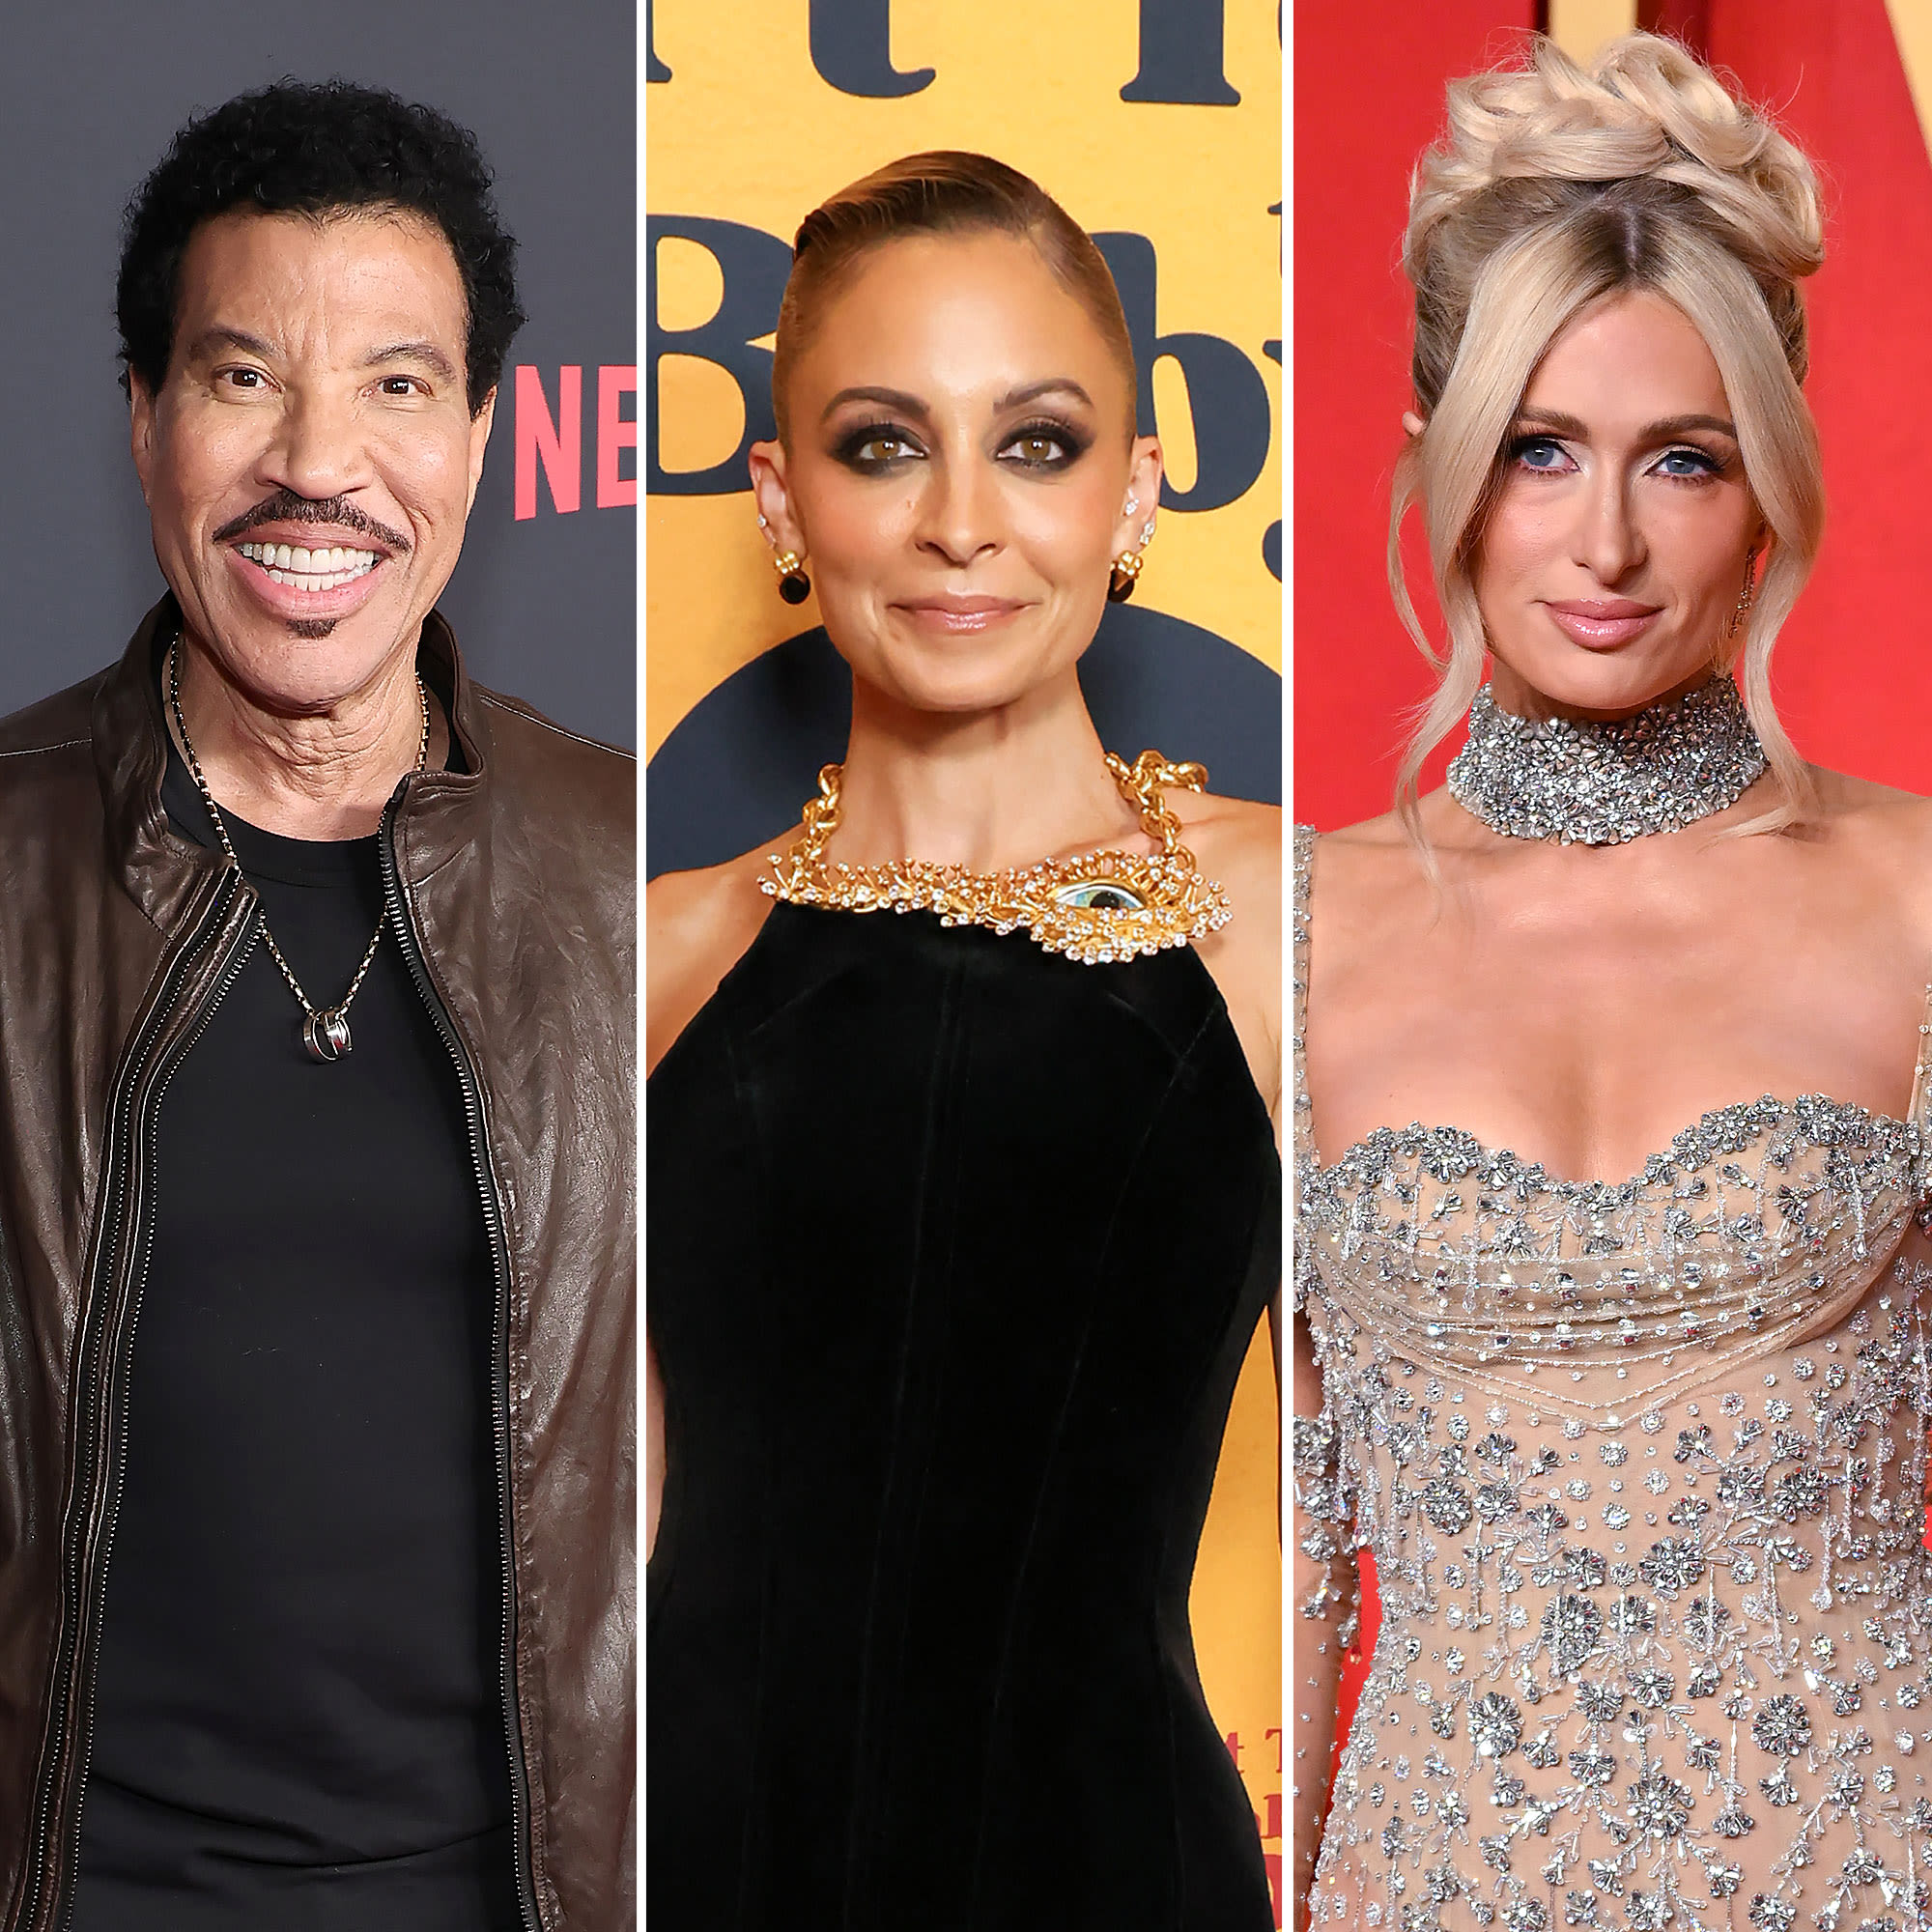 Lionel Richie Says Nicole Richie and Paris Hilton ‘Haven’t Changed’ Since ‘The Simple Life’